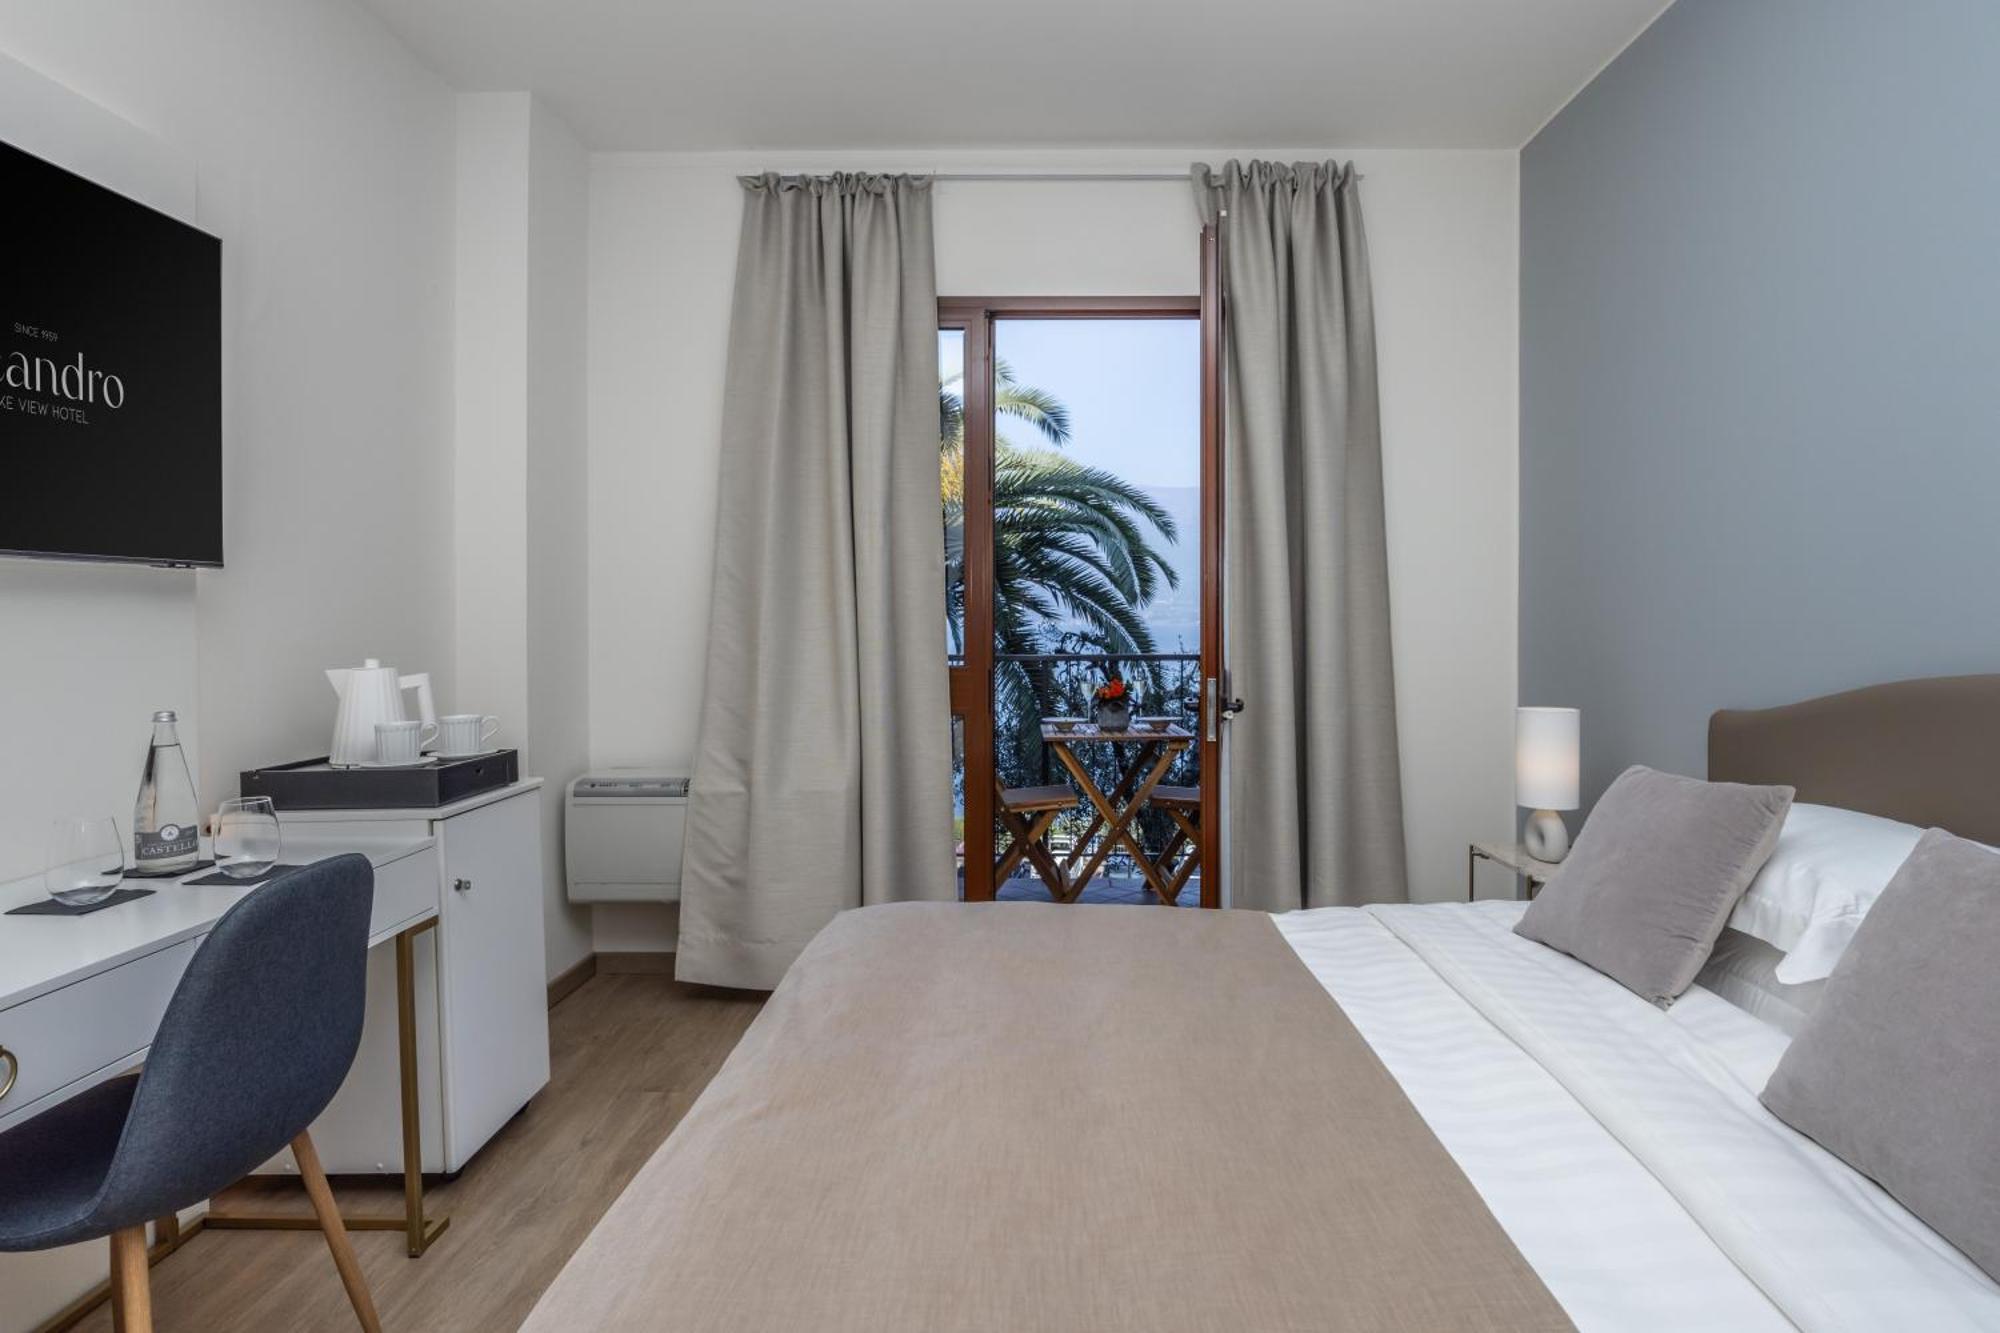 Hotel Meandro - Lake View Gargnano Room photo